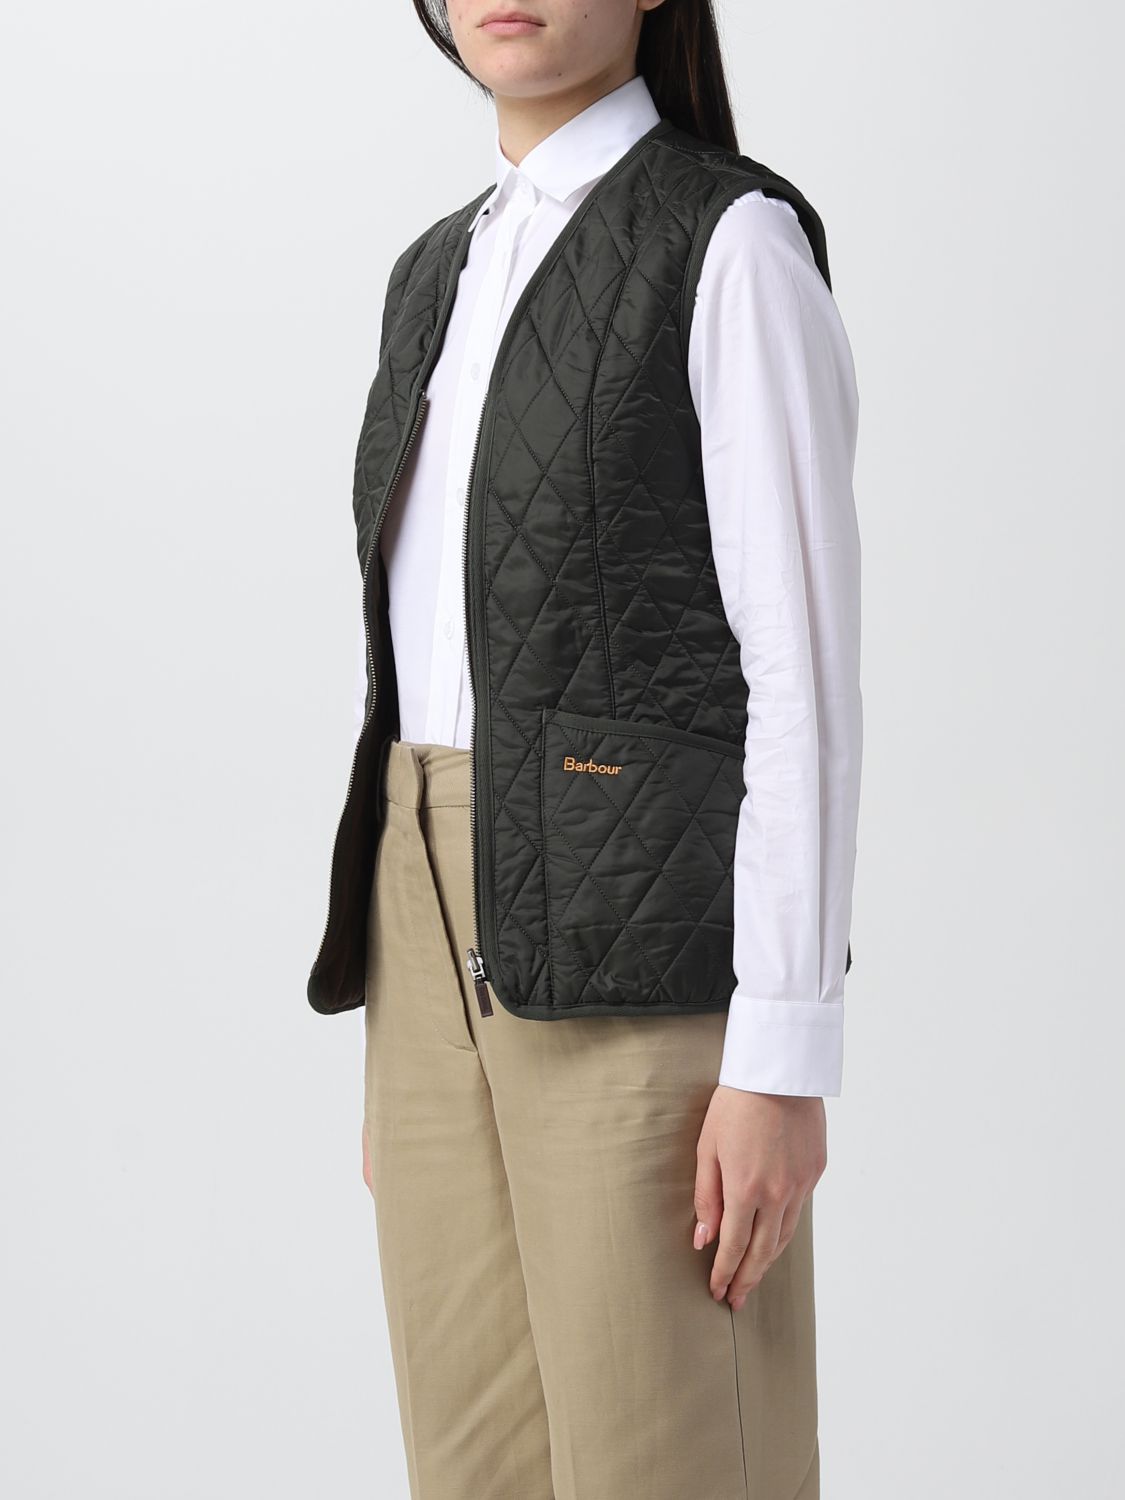 BARBOUR: waistcoat for woman - Olive | Barbour waistcoat LLI0003 online ...